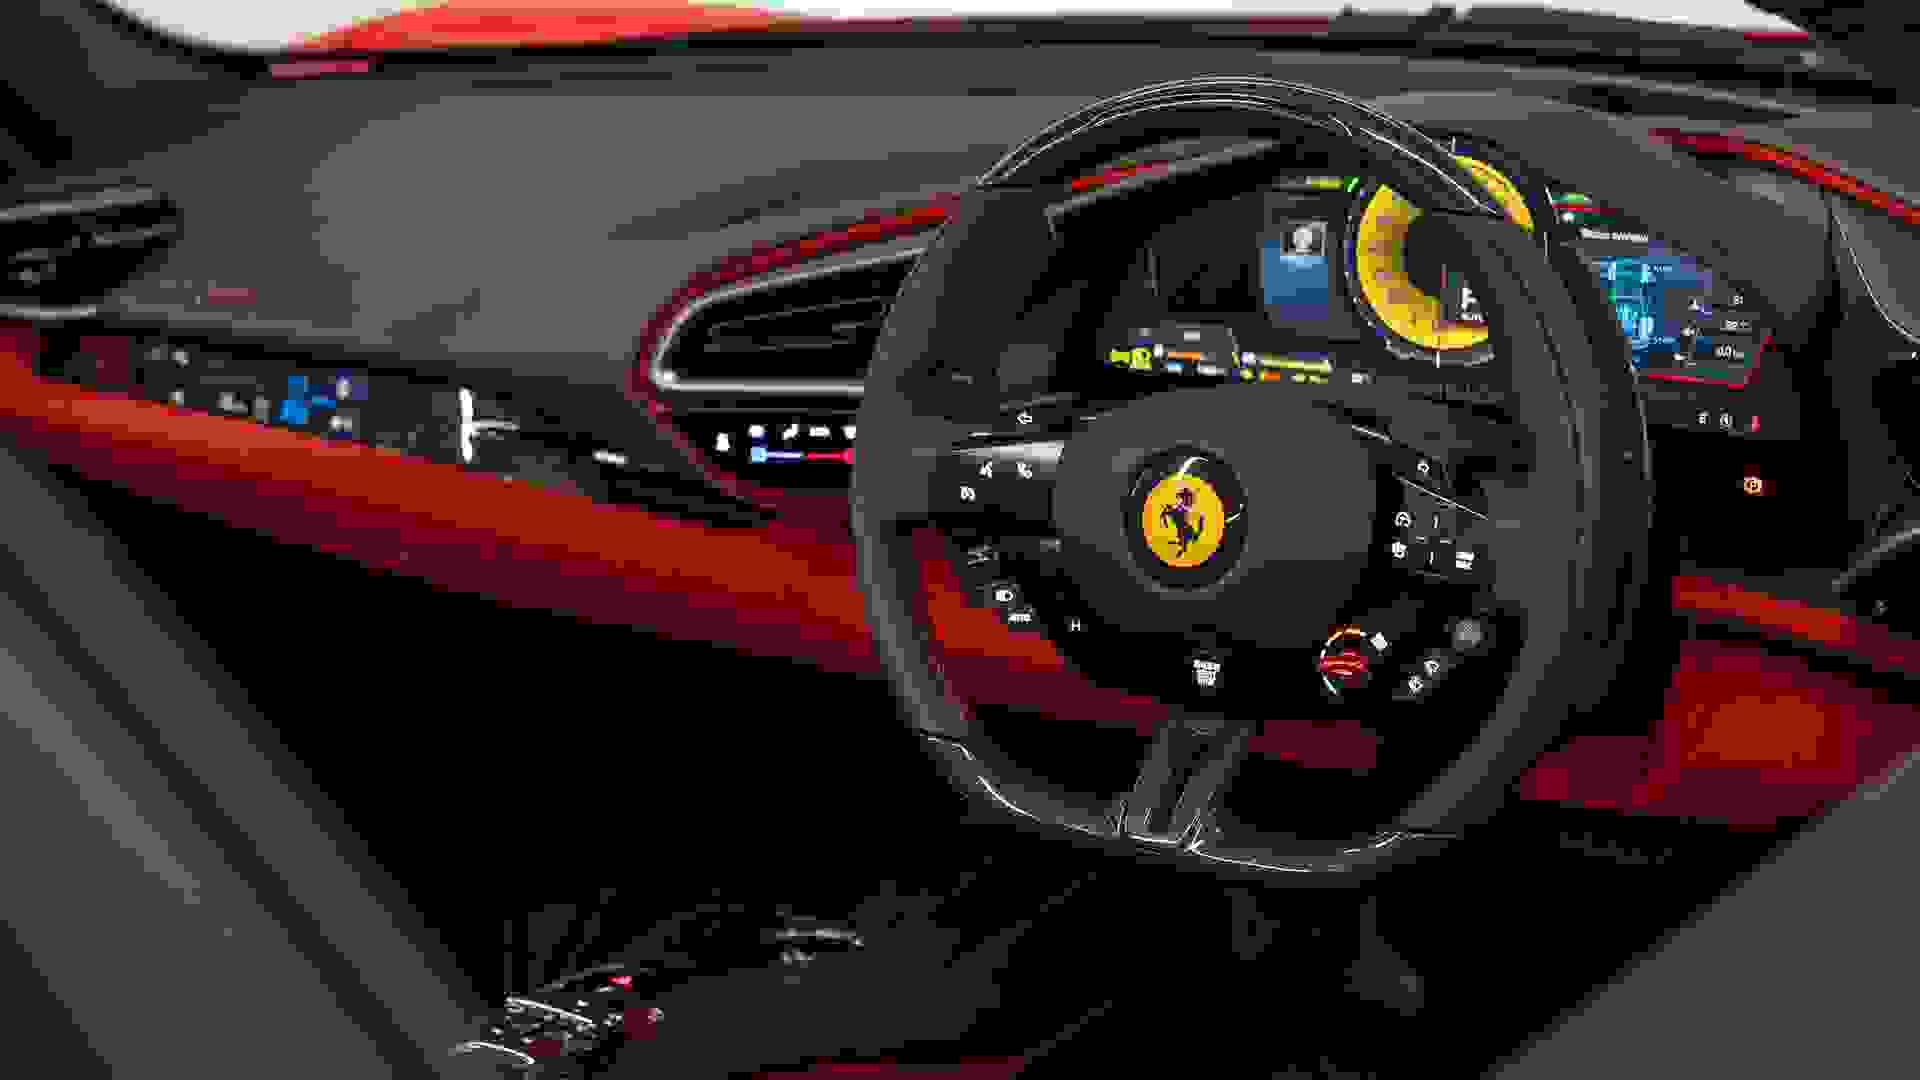 Ferrari 296 Photo 02fec6c4-b36e-4159-9bb3-4dbf6529eb8c.jpg